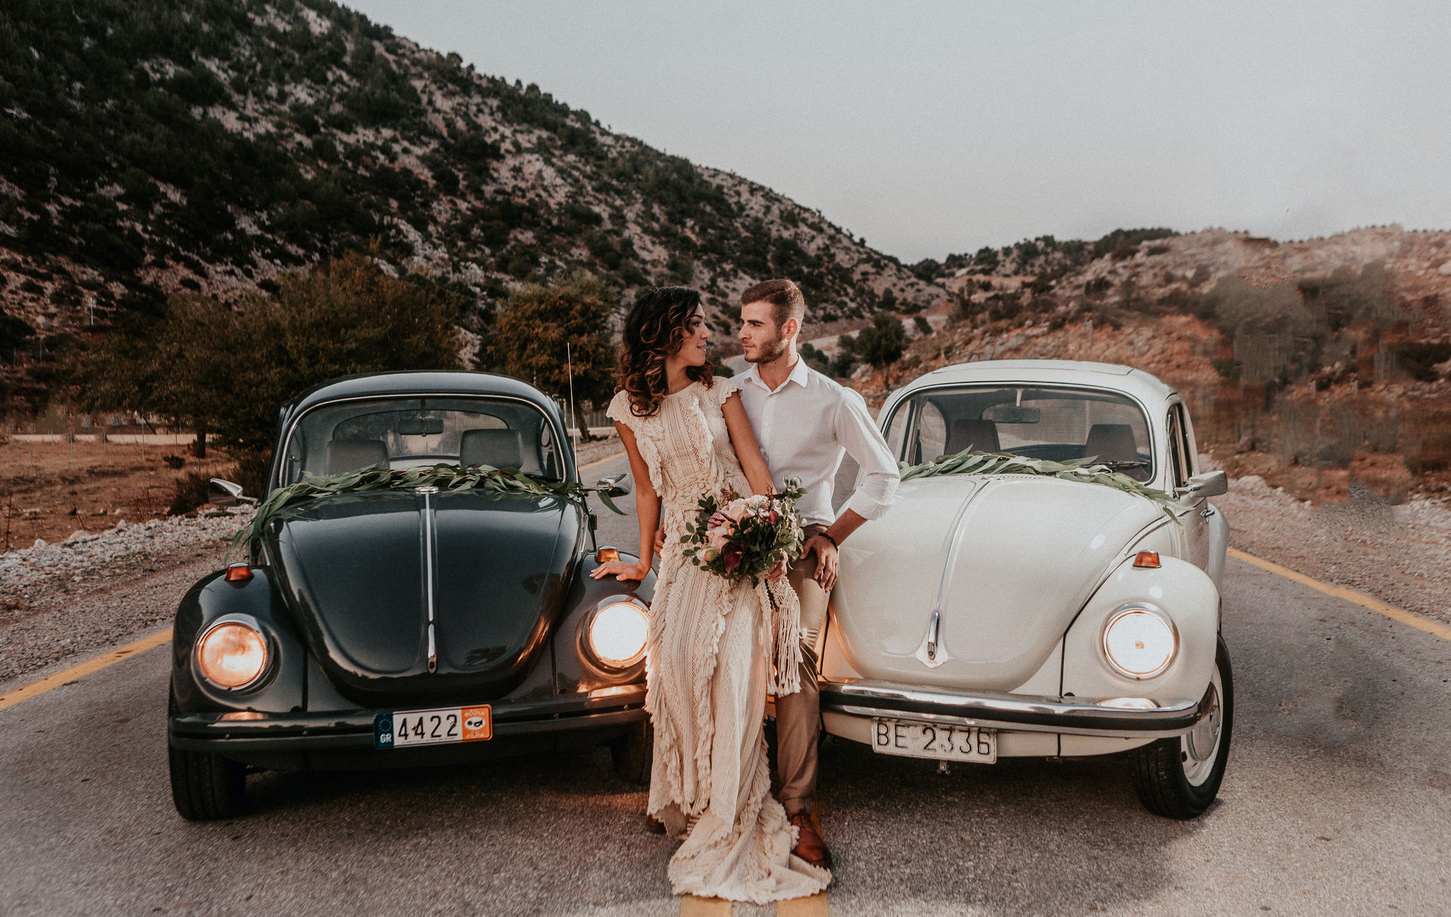 Rustic Wedding at Cretan Mountain